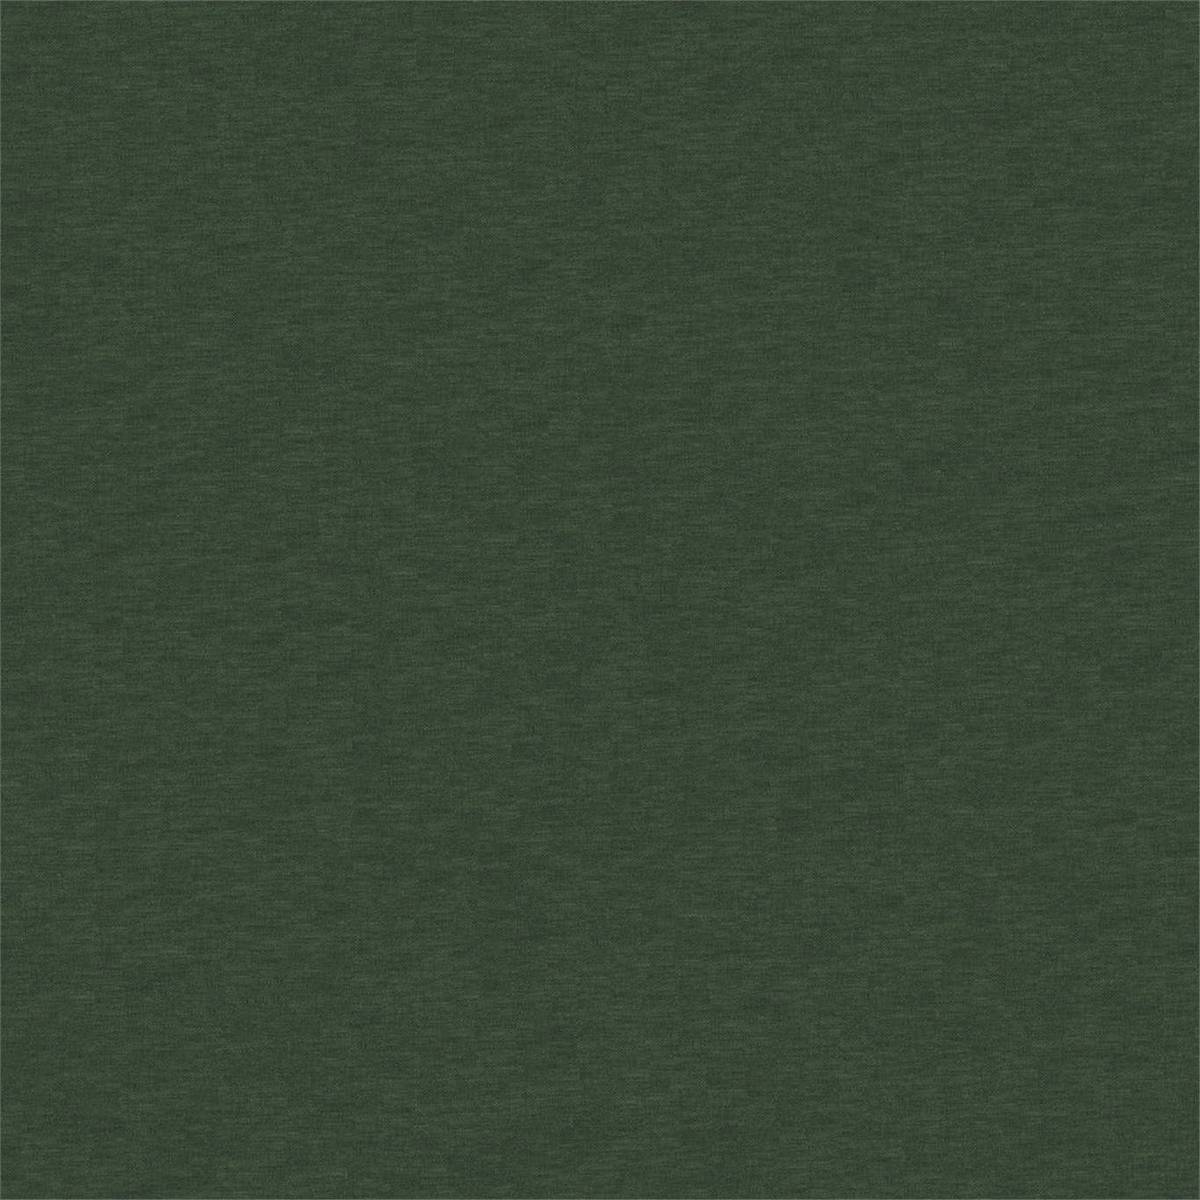 Esala Plains Evergreen Fabric by Scion